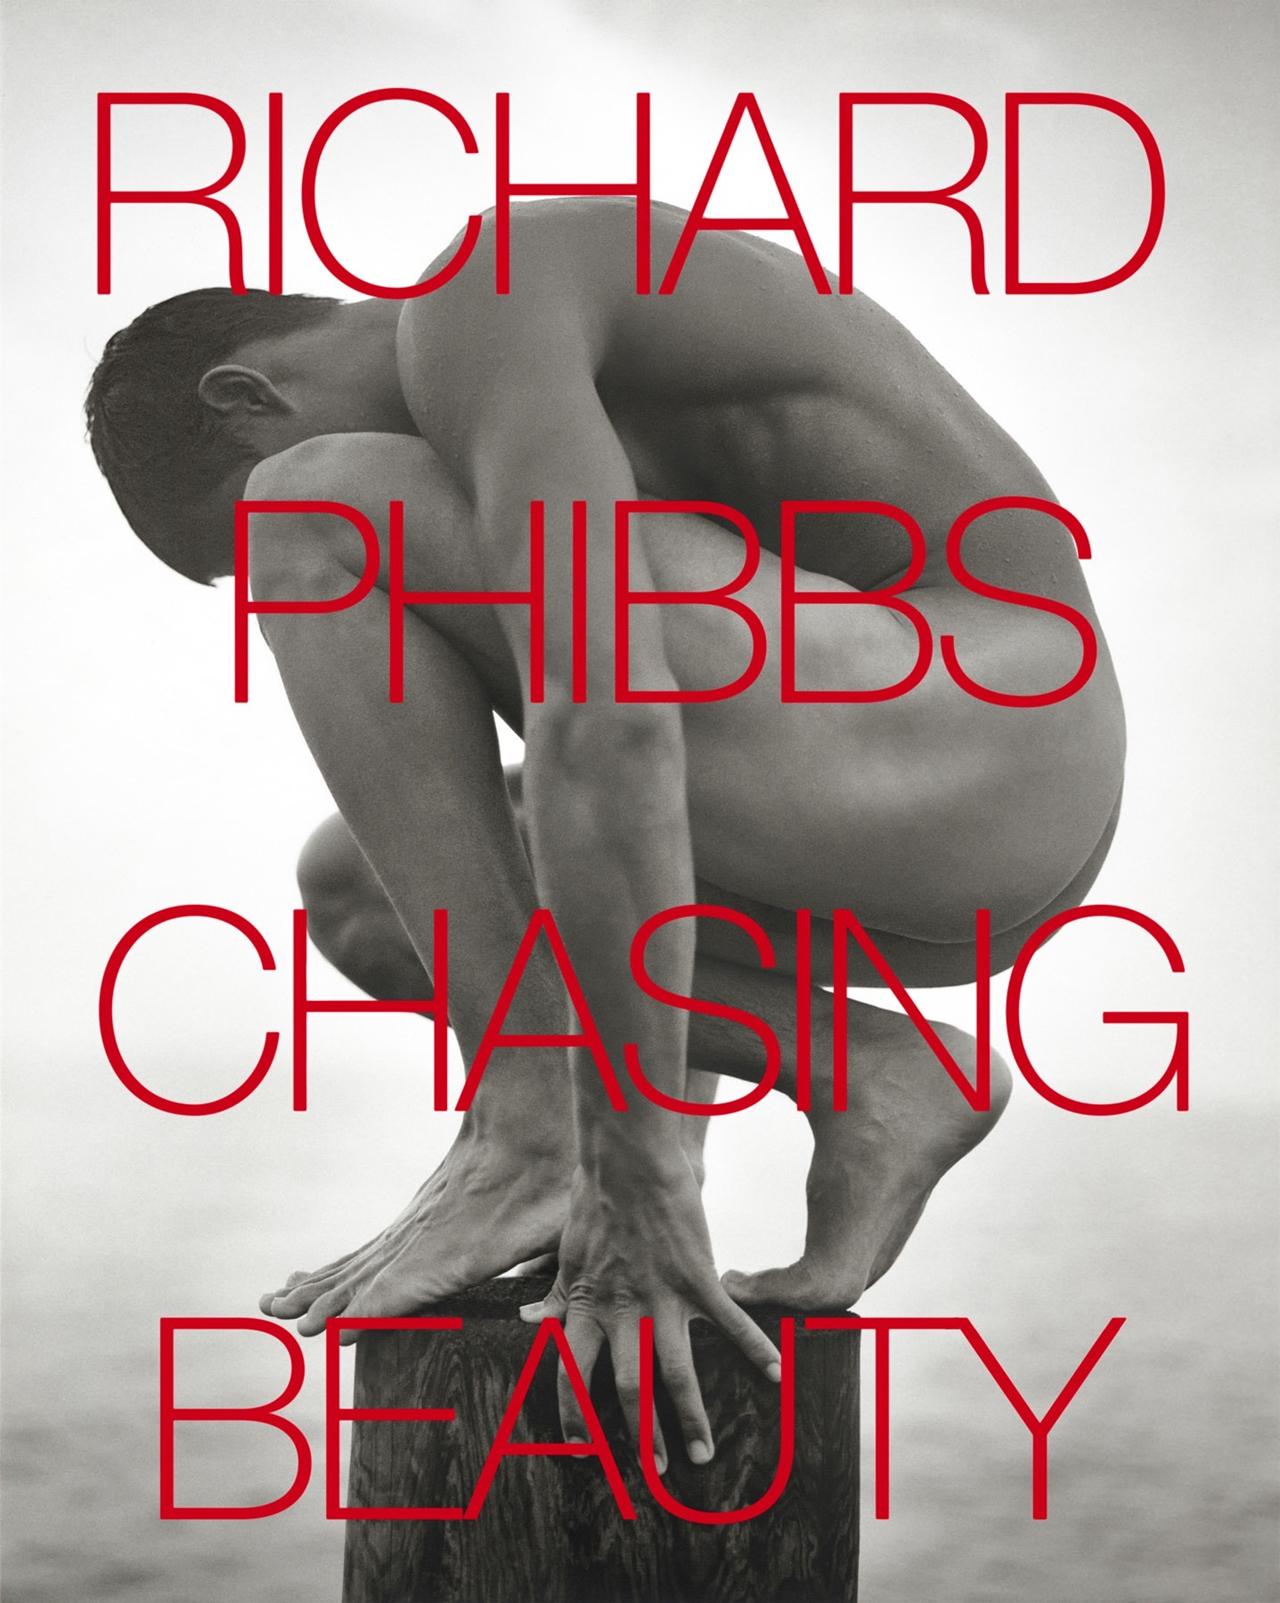 Richard Phibbs Chasing Beauty Book